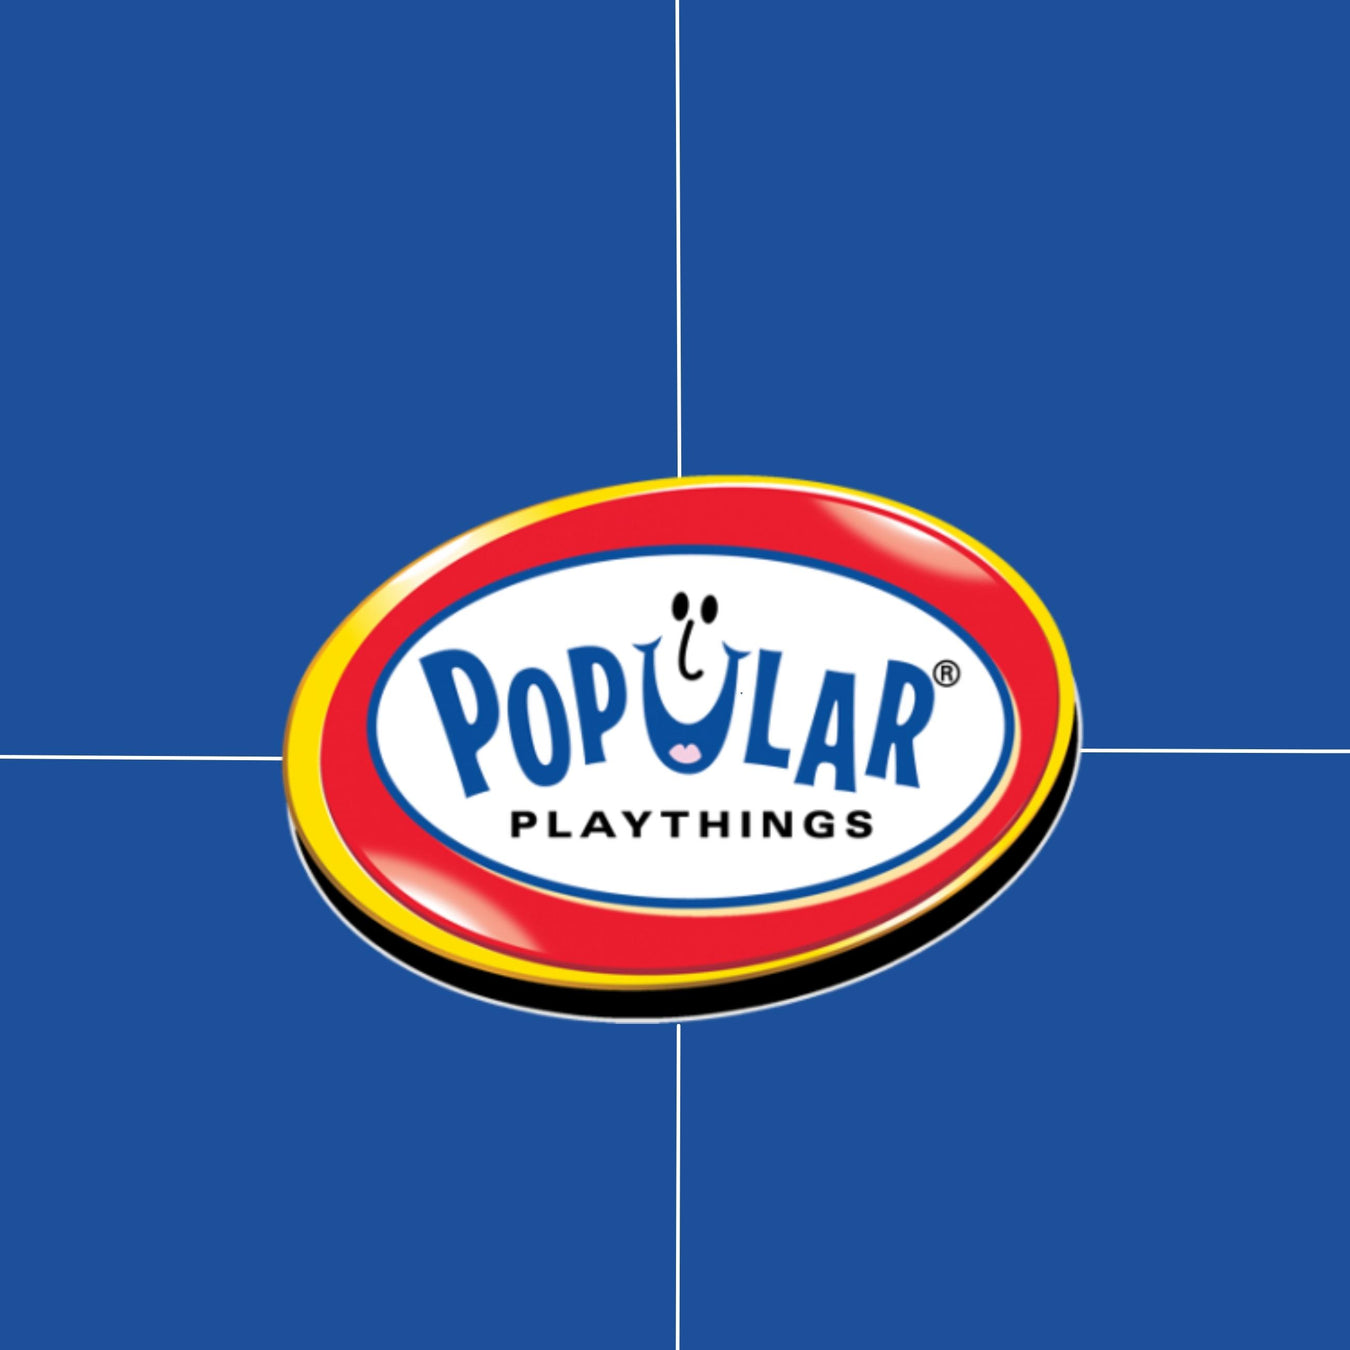 Popular Playthings